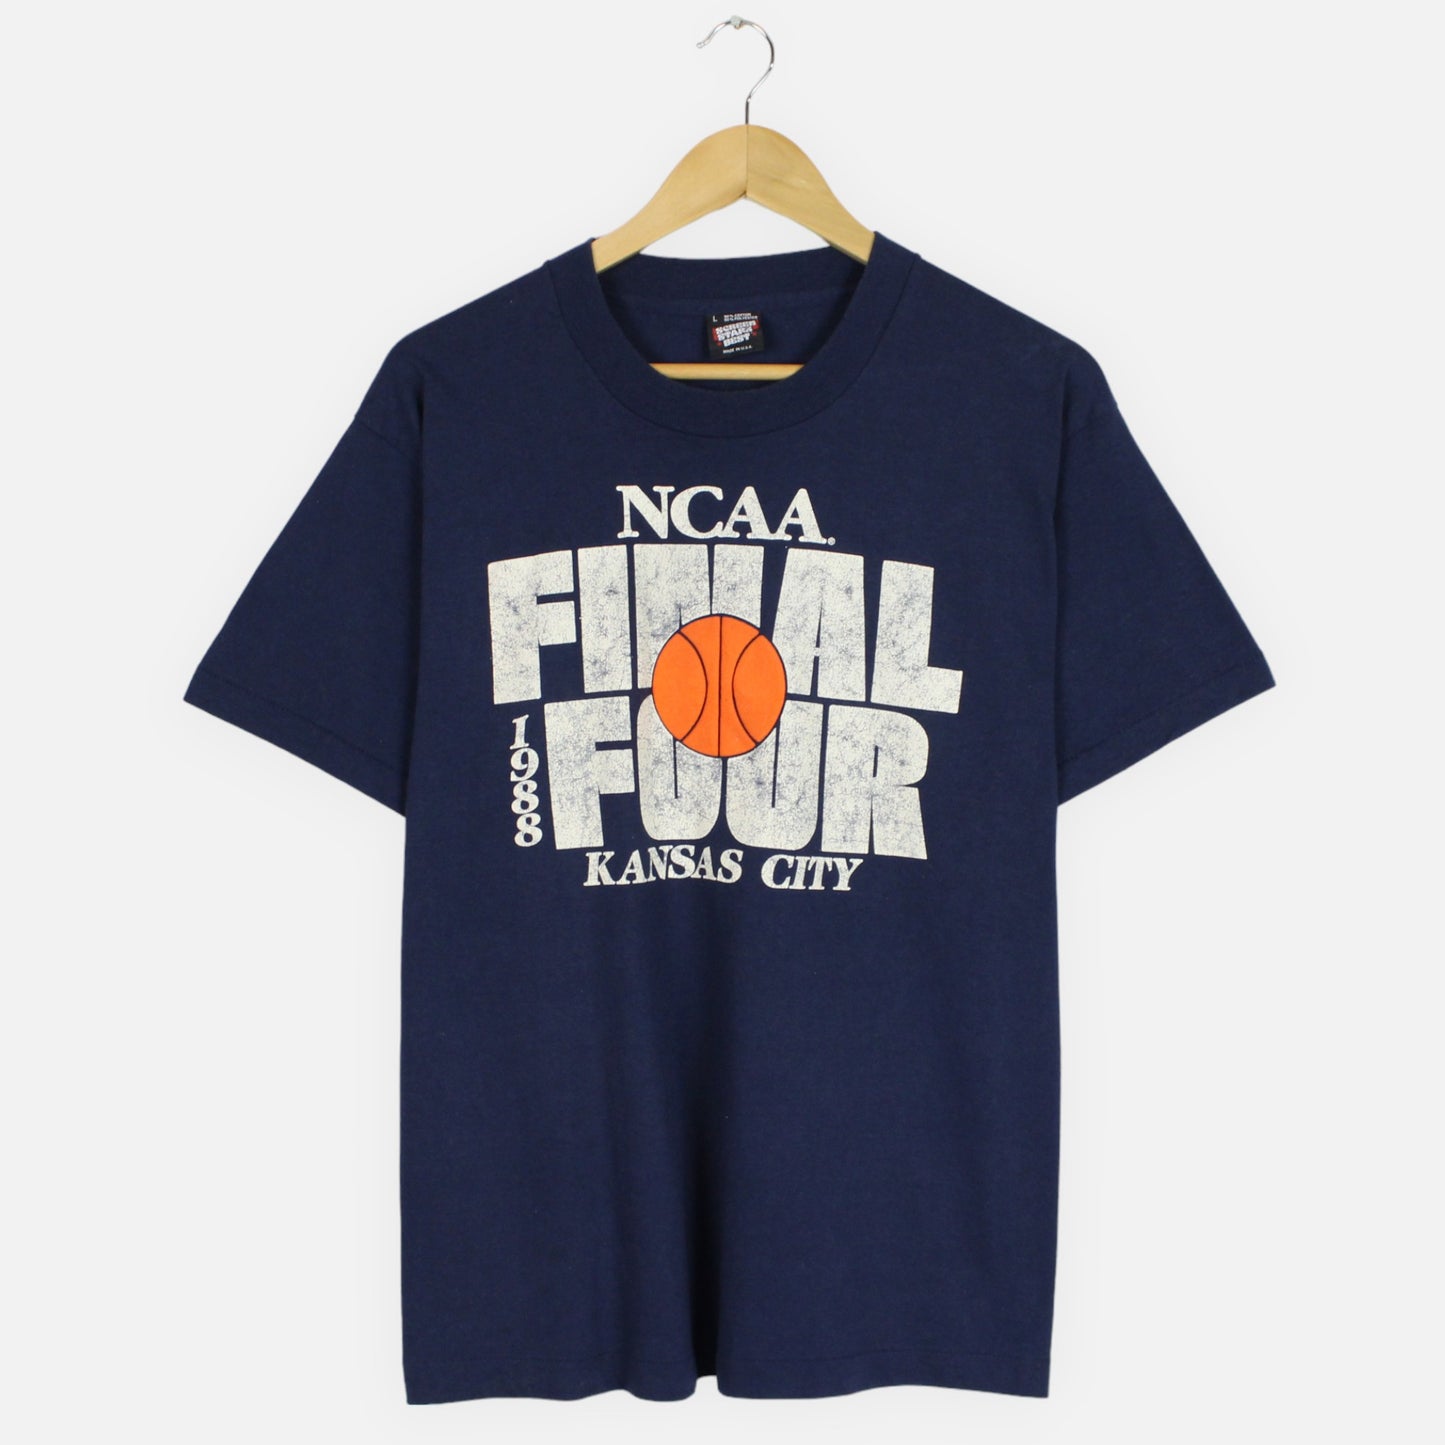 Vintage 1988 NCAA Final Four Basketball Tee - L